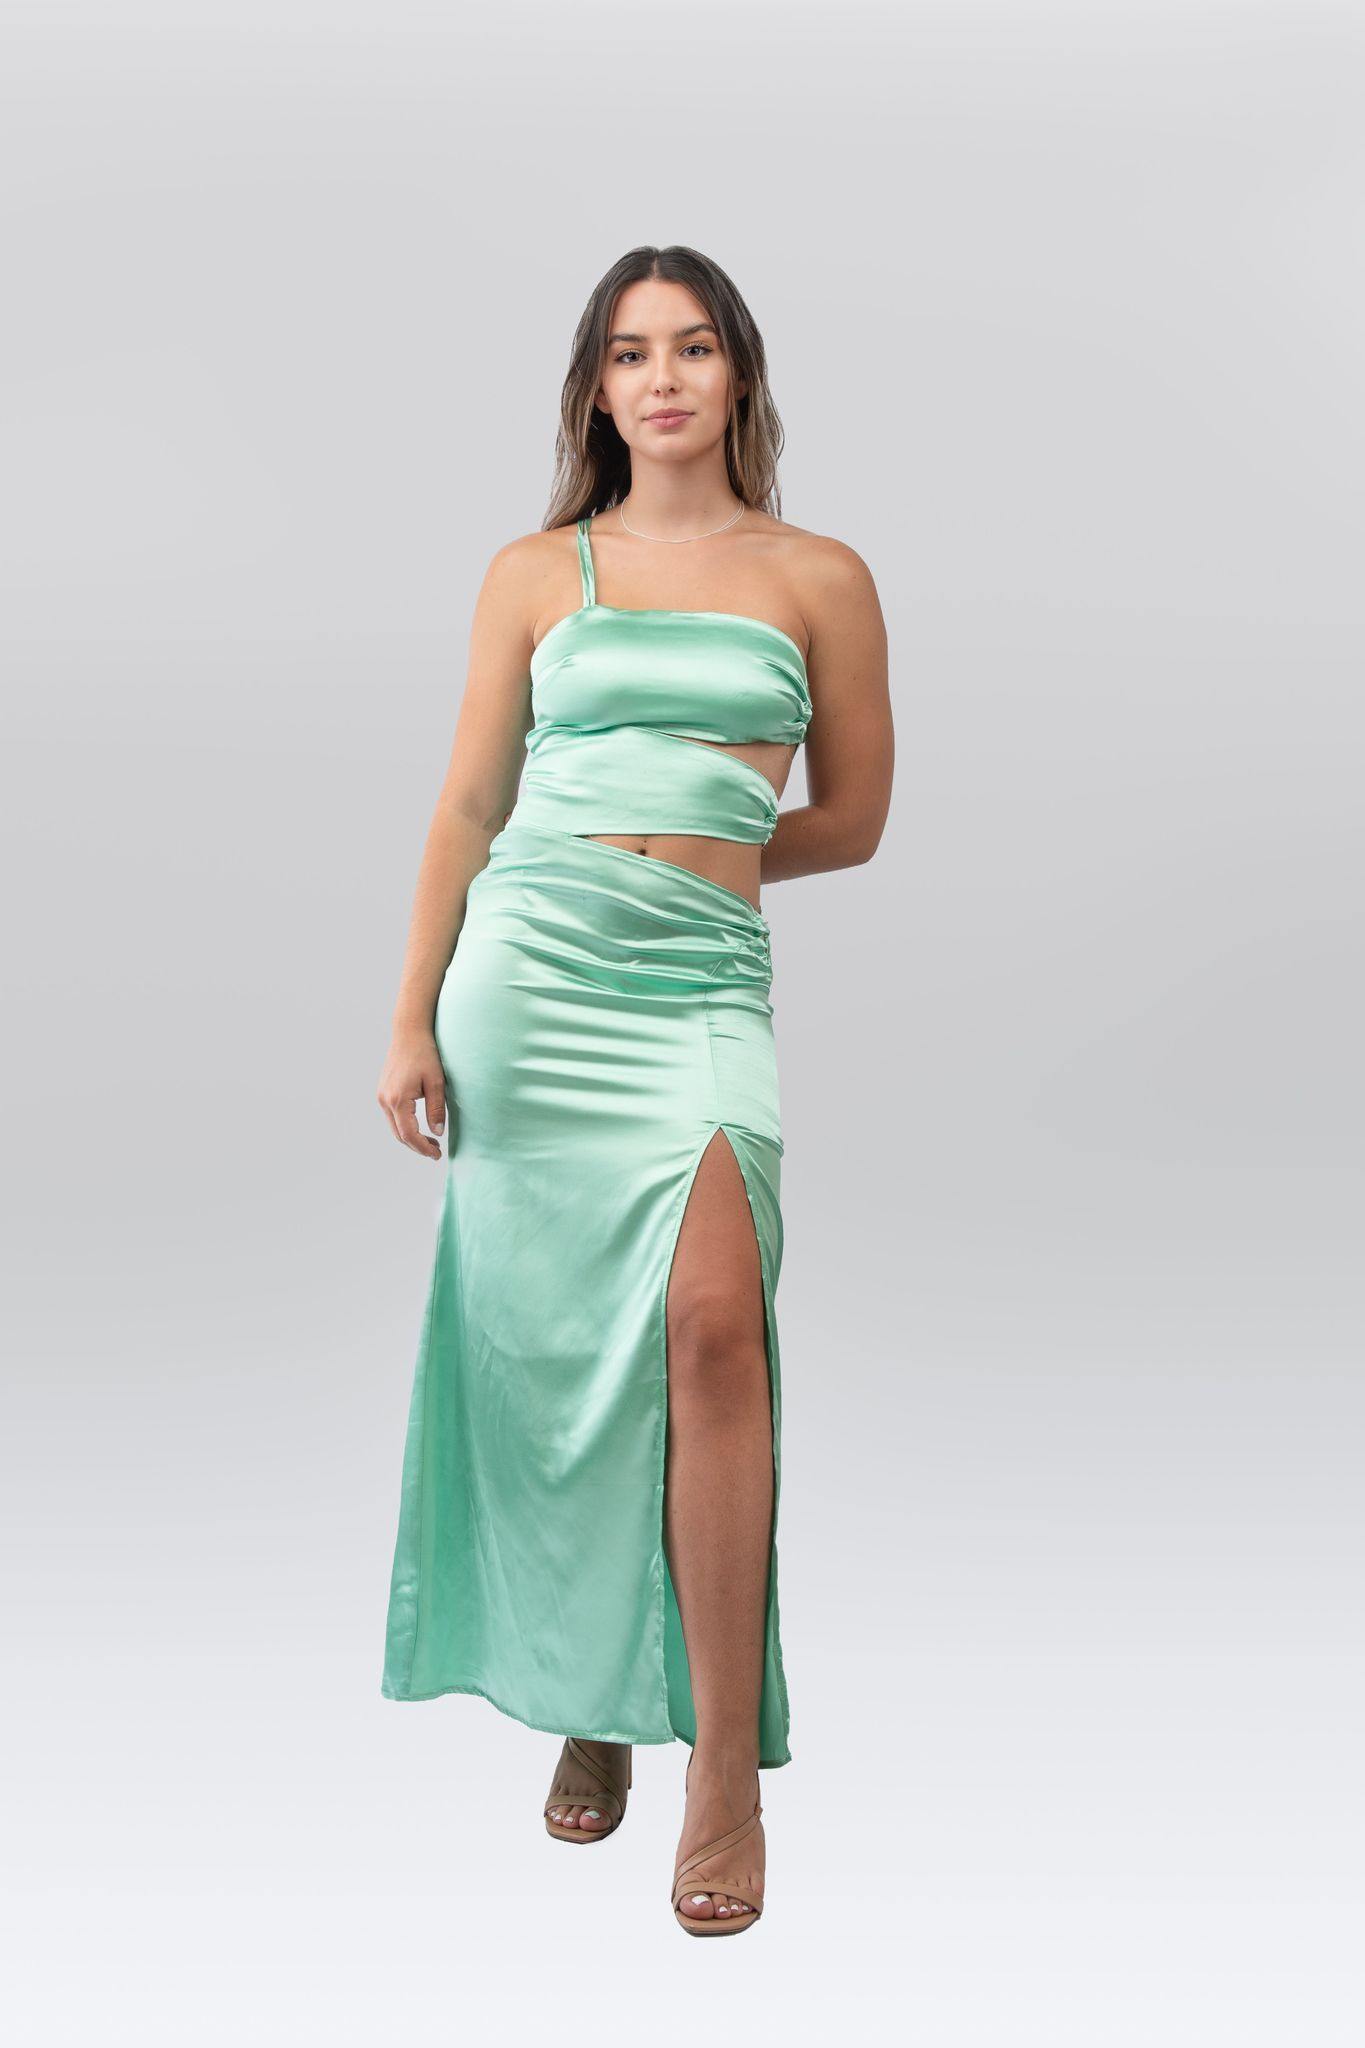 Triple O Ring Thigh Split Dress in Emerald Green - watts that trend